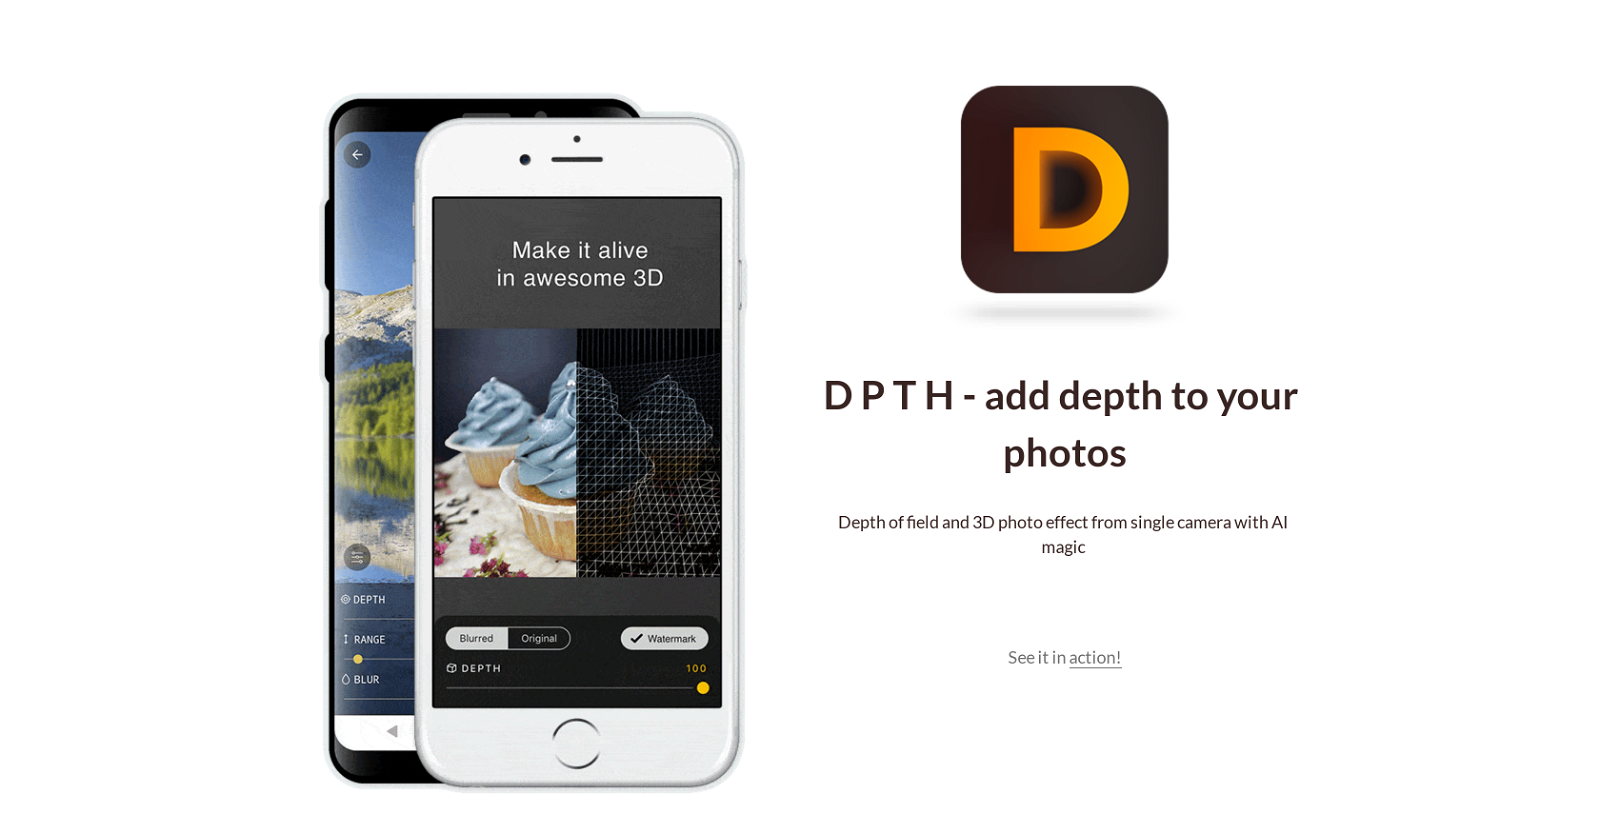 DPTH website